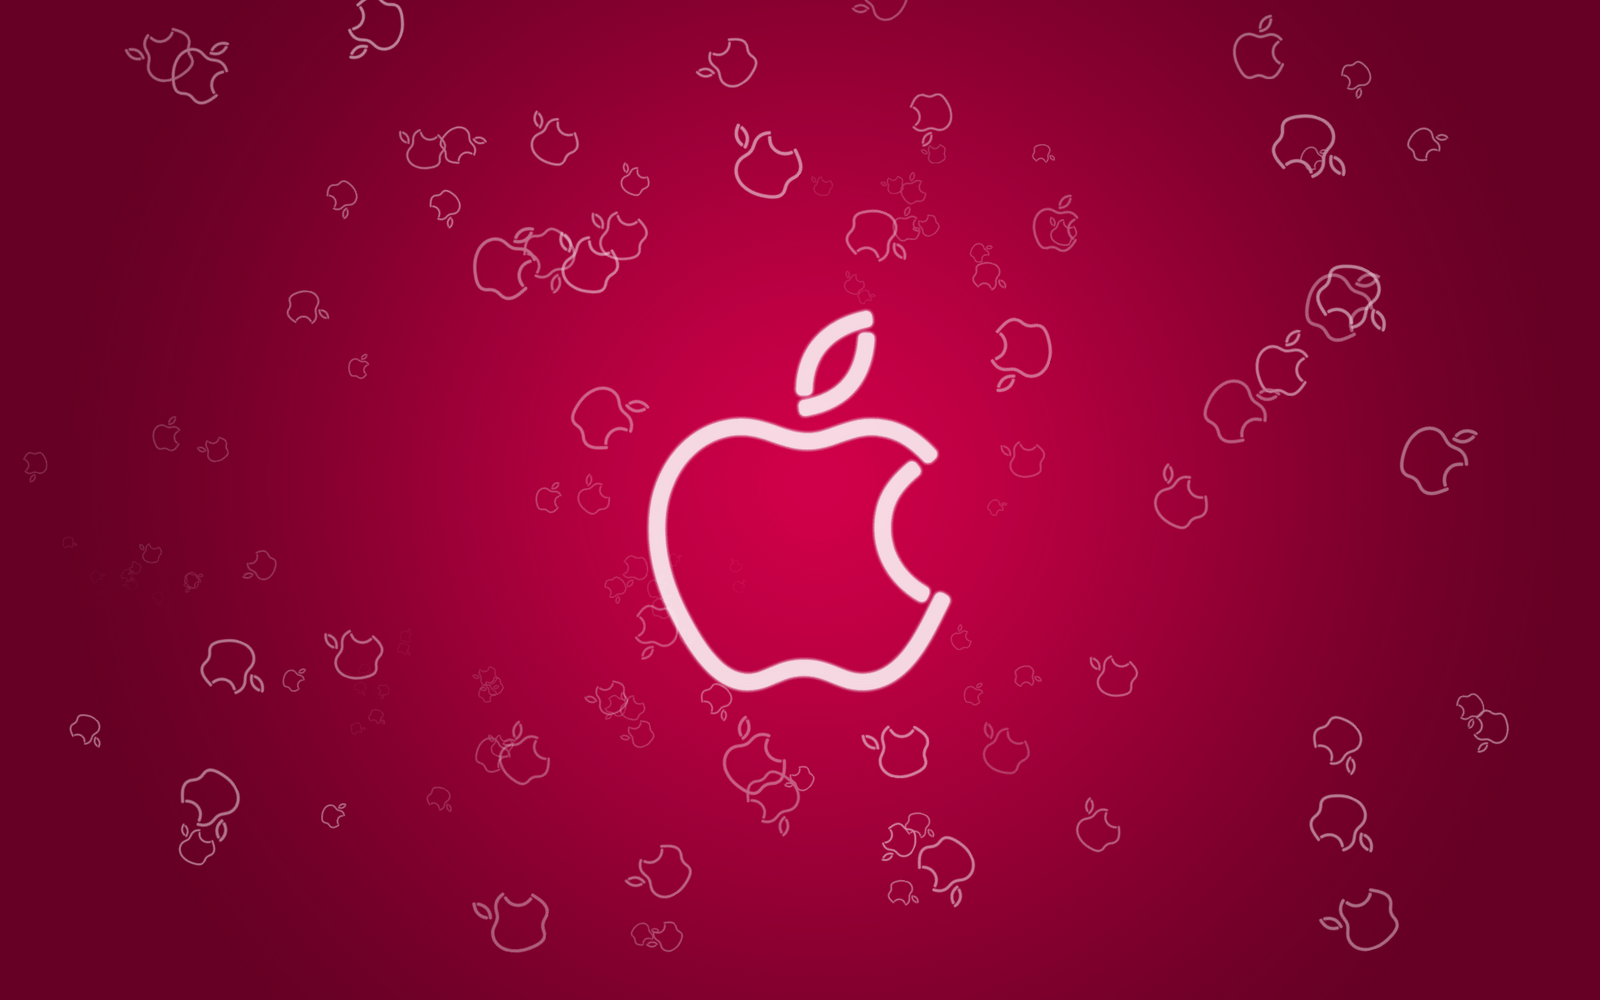 Red Apple Wallpaper